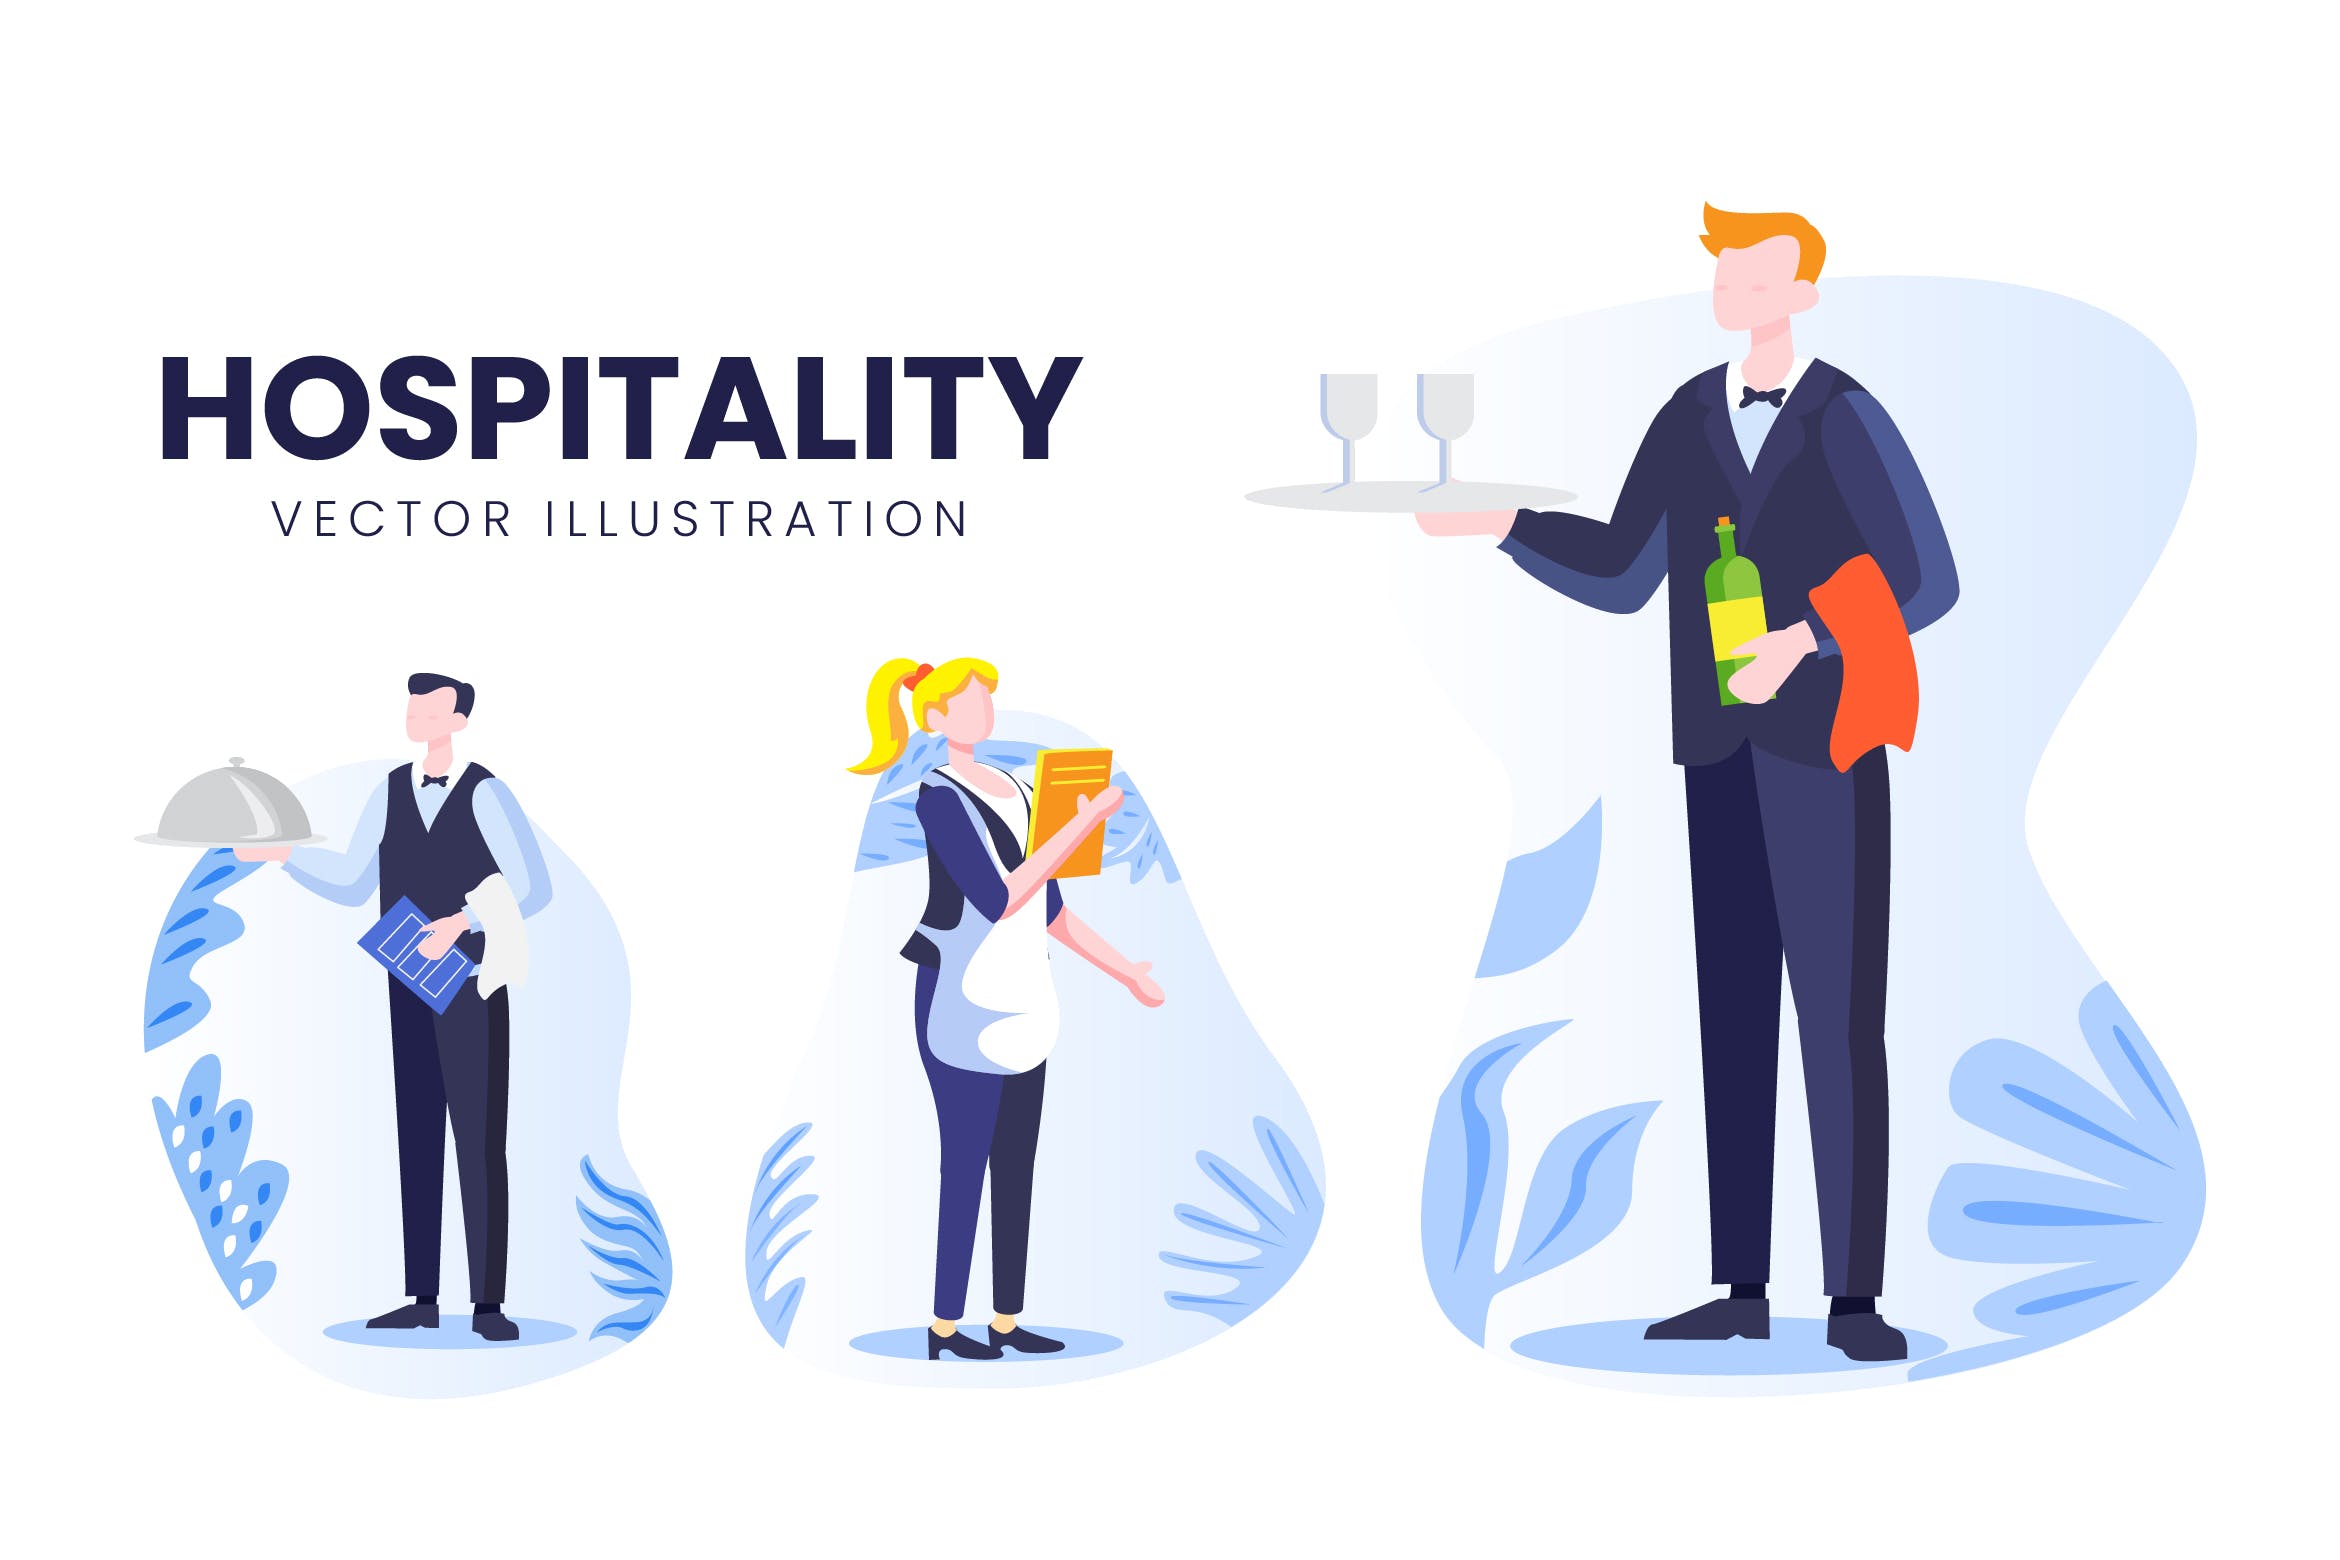 酒店职员人物形象16图库精选手绘插画矢量素材 Hospitality Occupation Vector Character Set插图